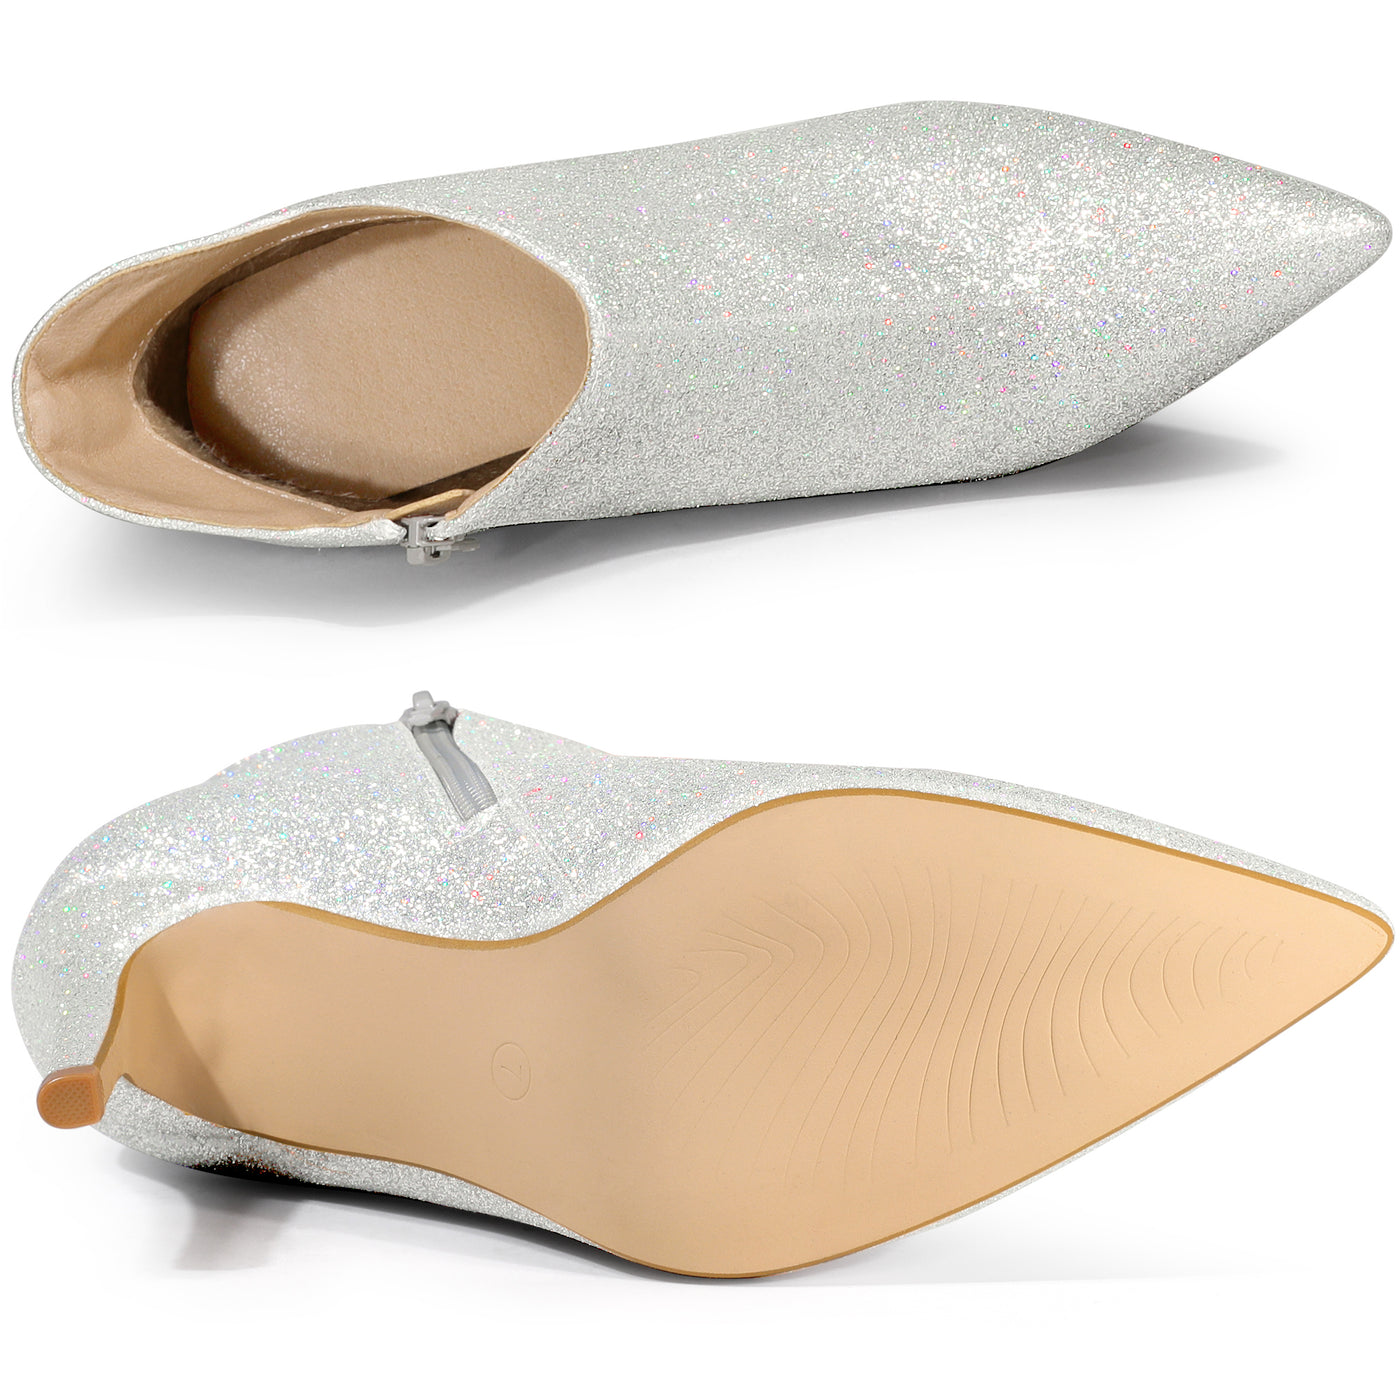 Allegra K Women's Glitter Pointed Toe Stiletto Heel Cutout Ankle Boots